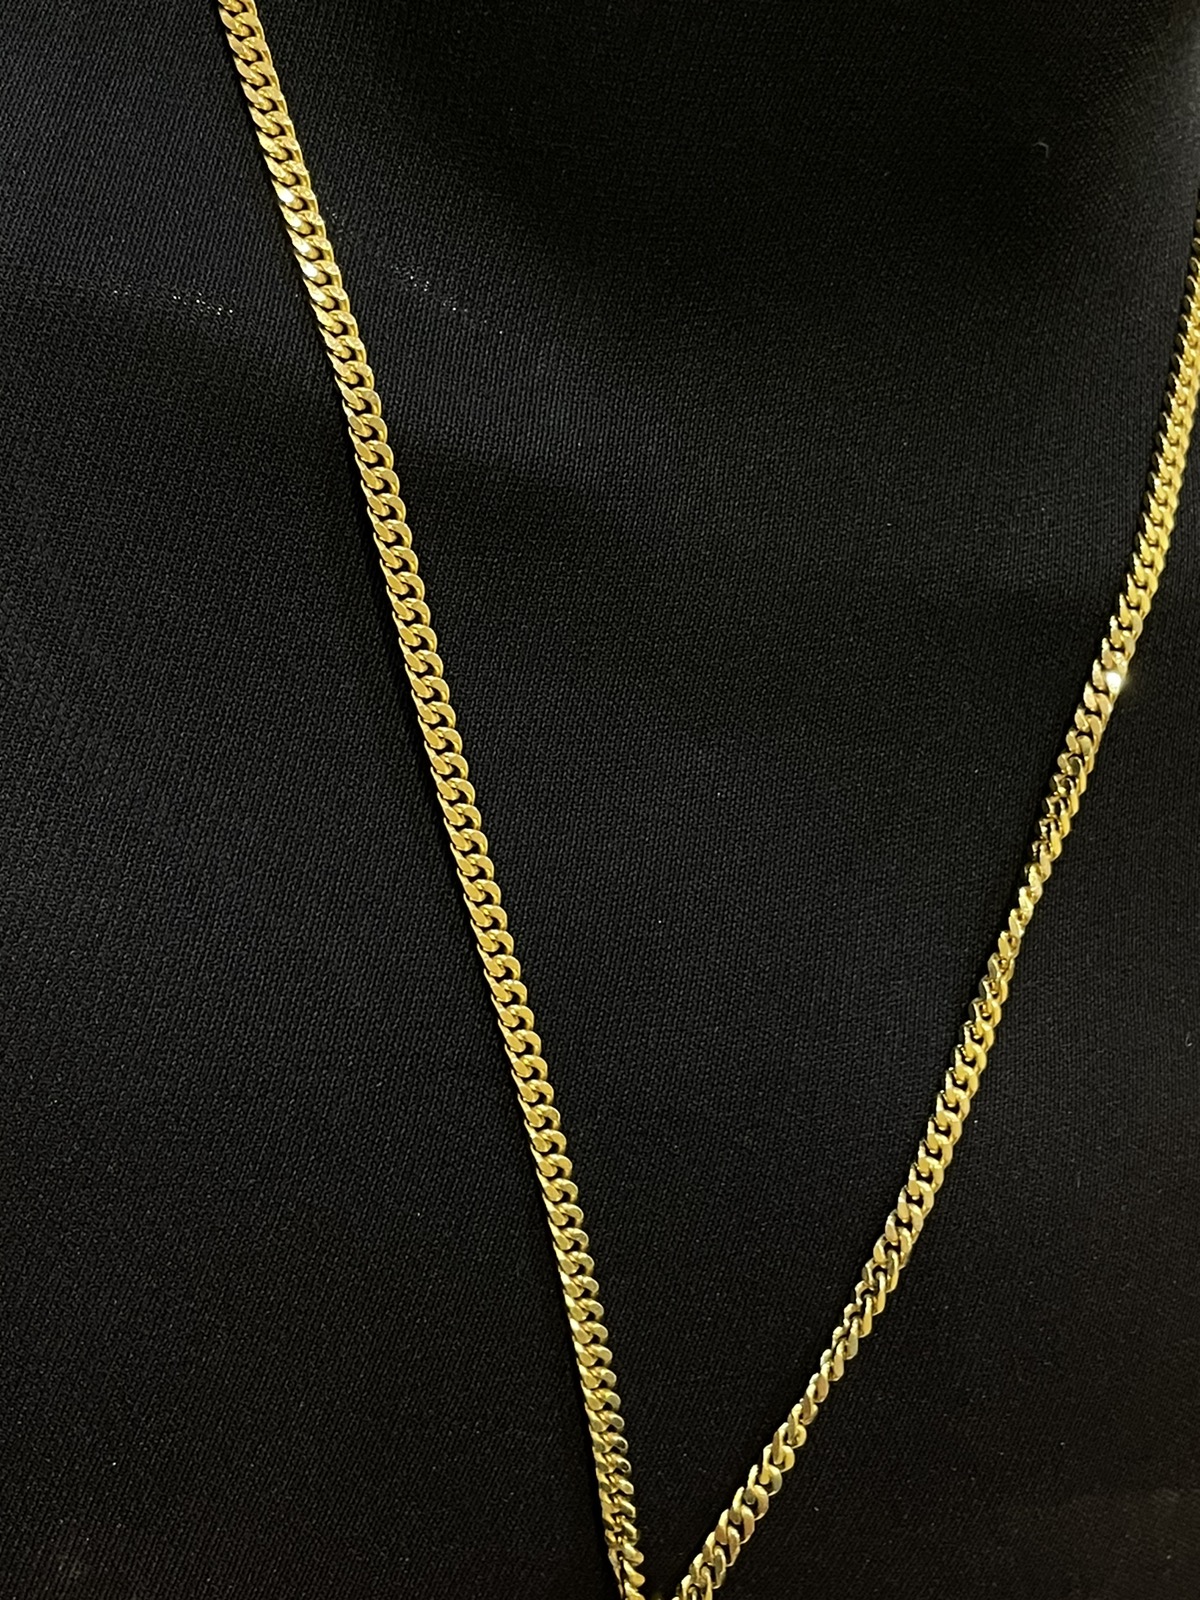 Louis Vuitton pad lock custom necklace/ chain gold - 6